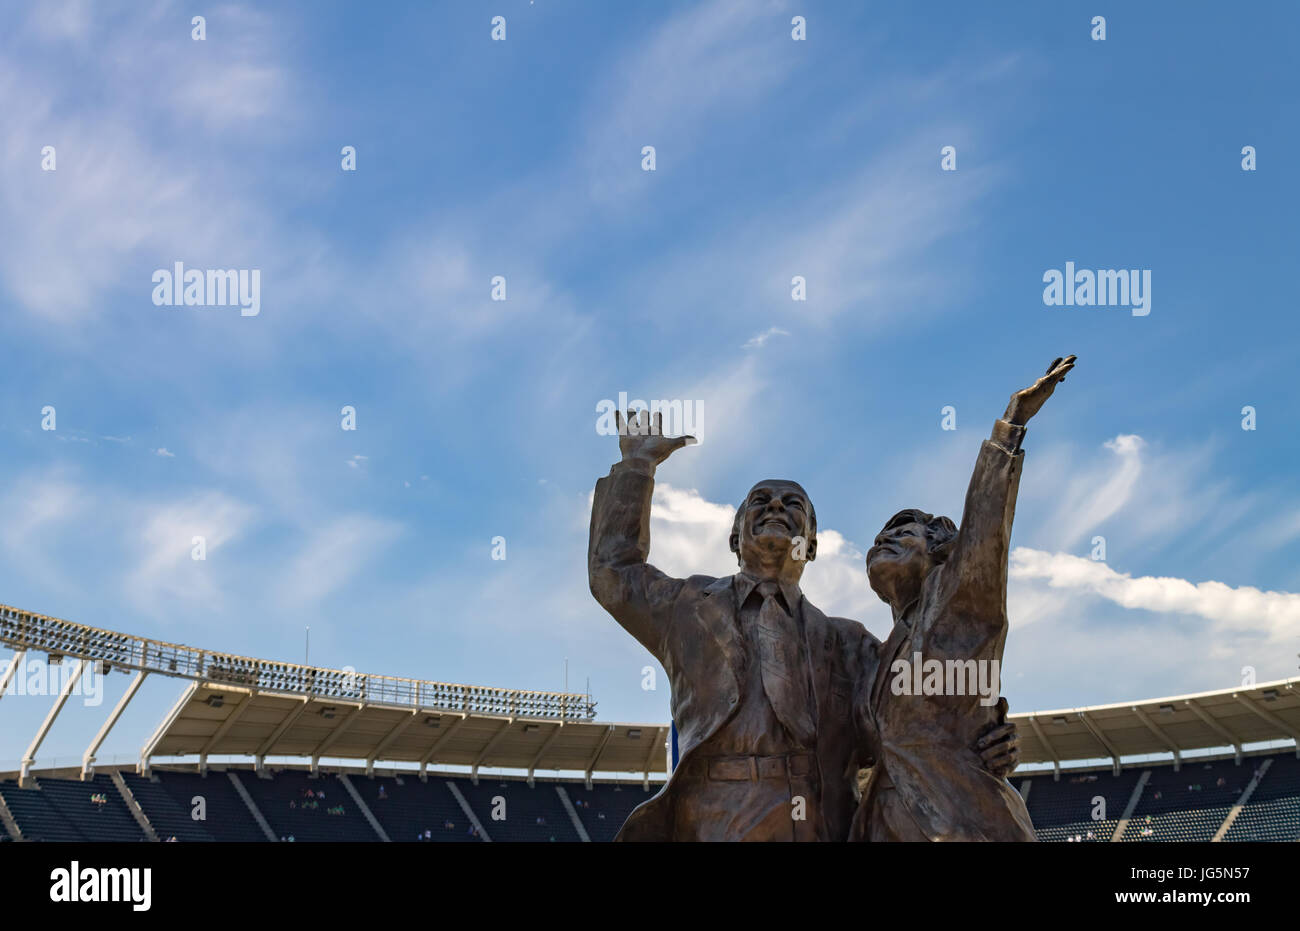 Kansas city, Missouri United States- 6/26/2017 Ewing Marion Kauffman and Muriel irene Kauffman bronze statue at Kauffman Stadium Stock Photo